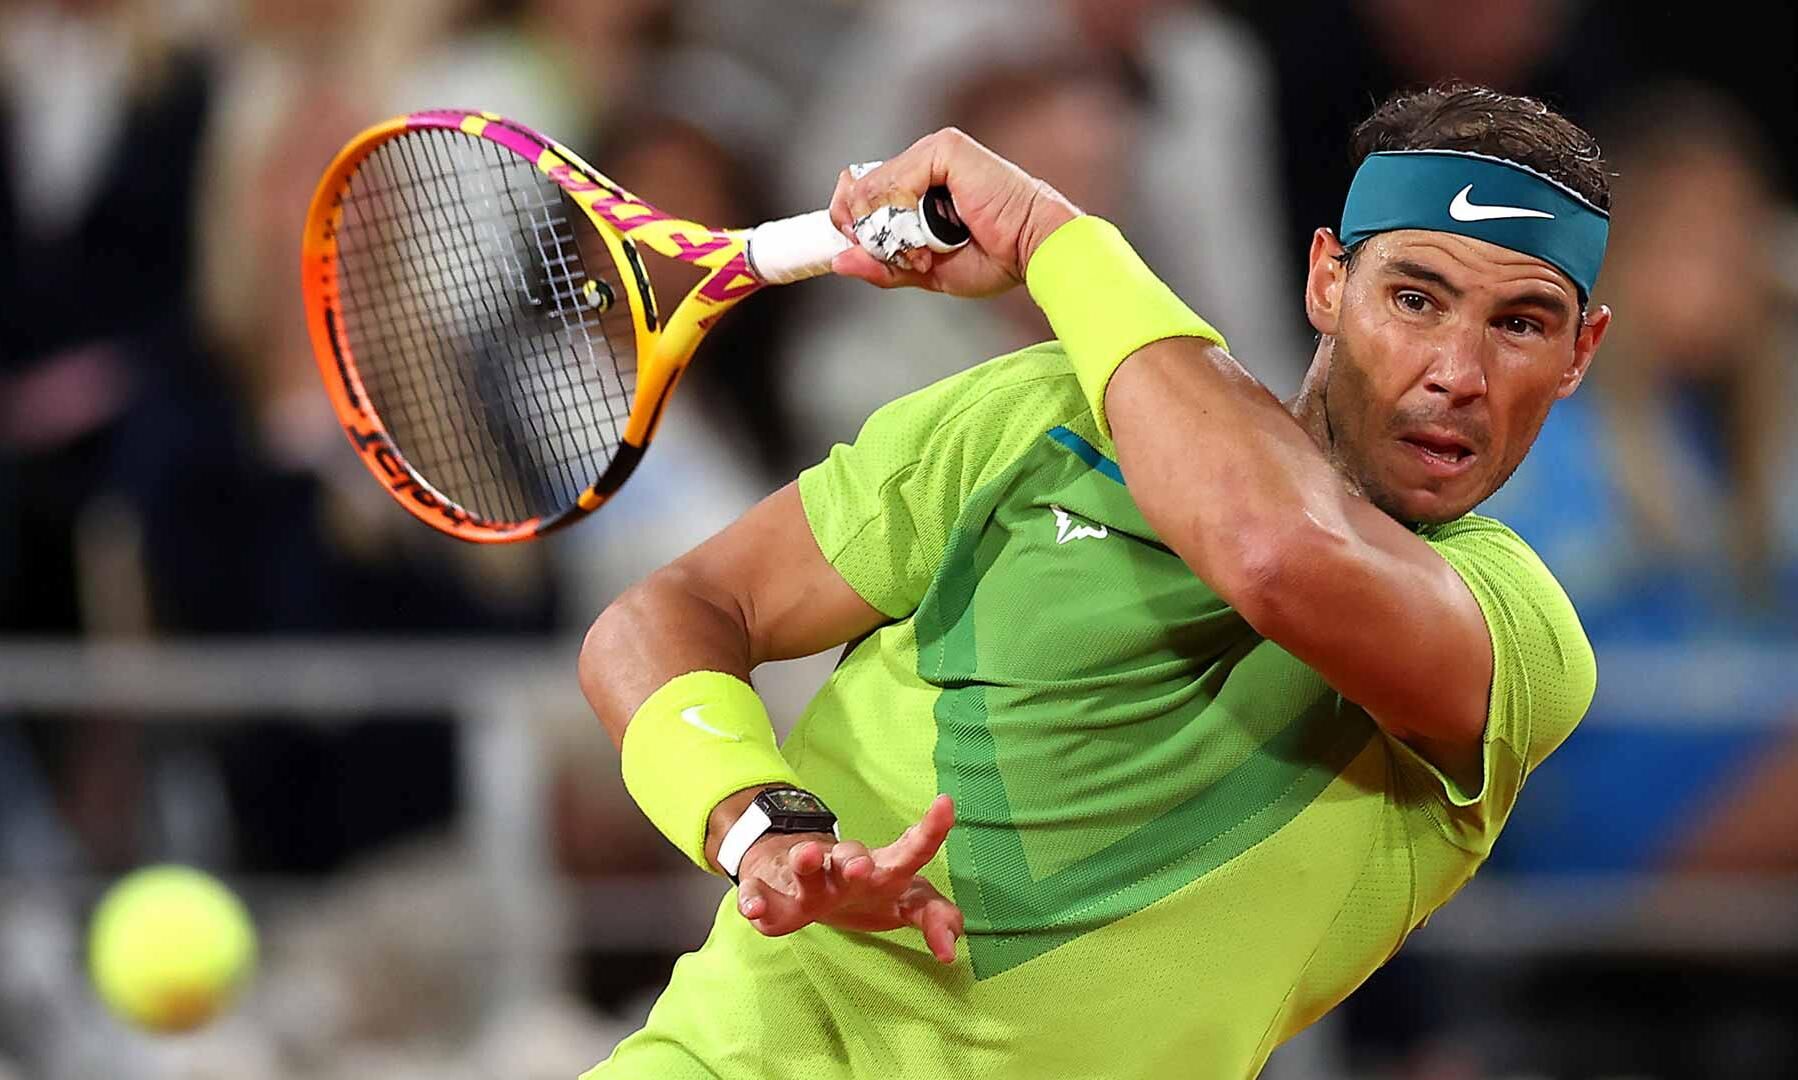 Spanish tennis player Rafael Nadal